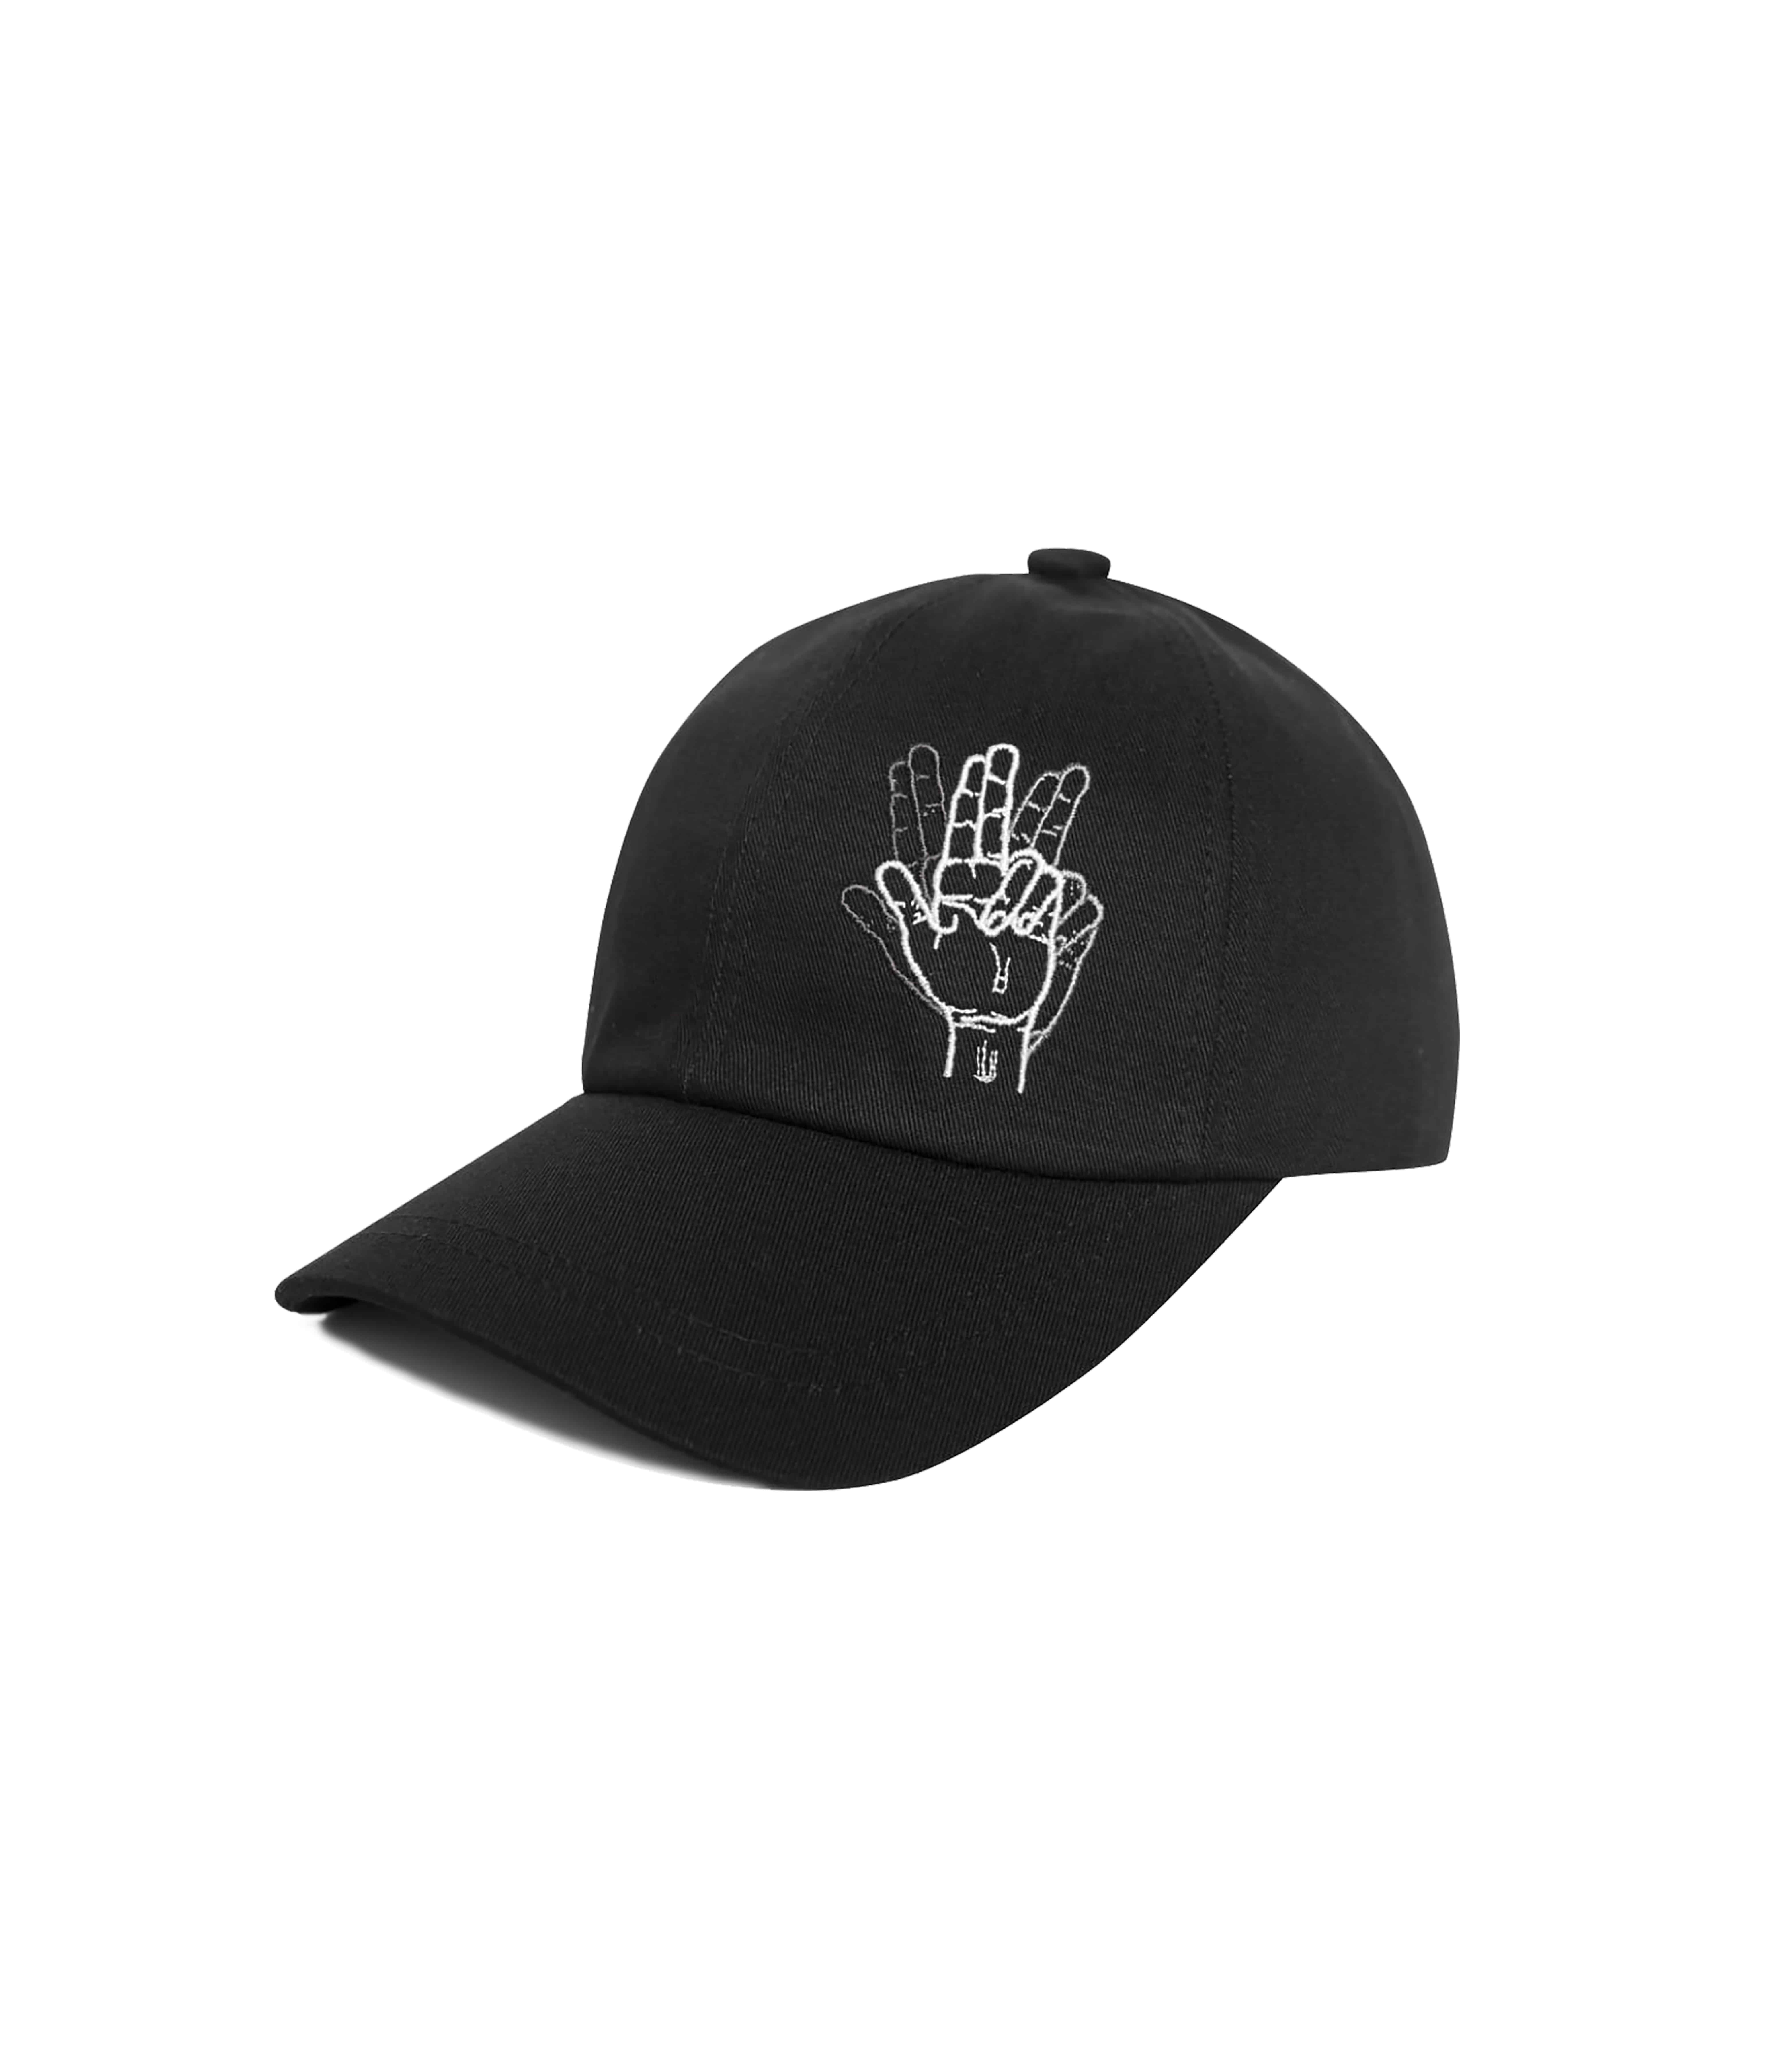 VIBRATEKIDS - REMOTE HAND LOGO BALL CAP (BLACK)